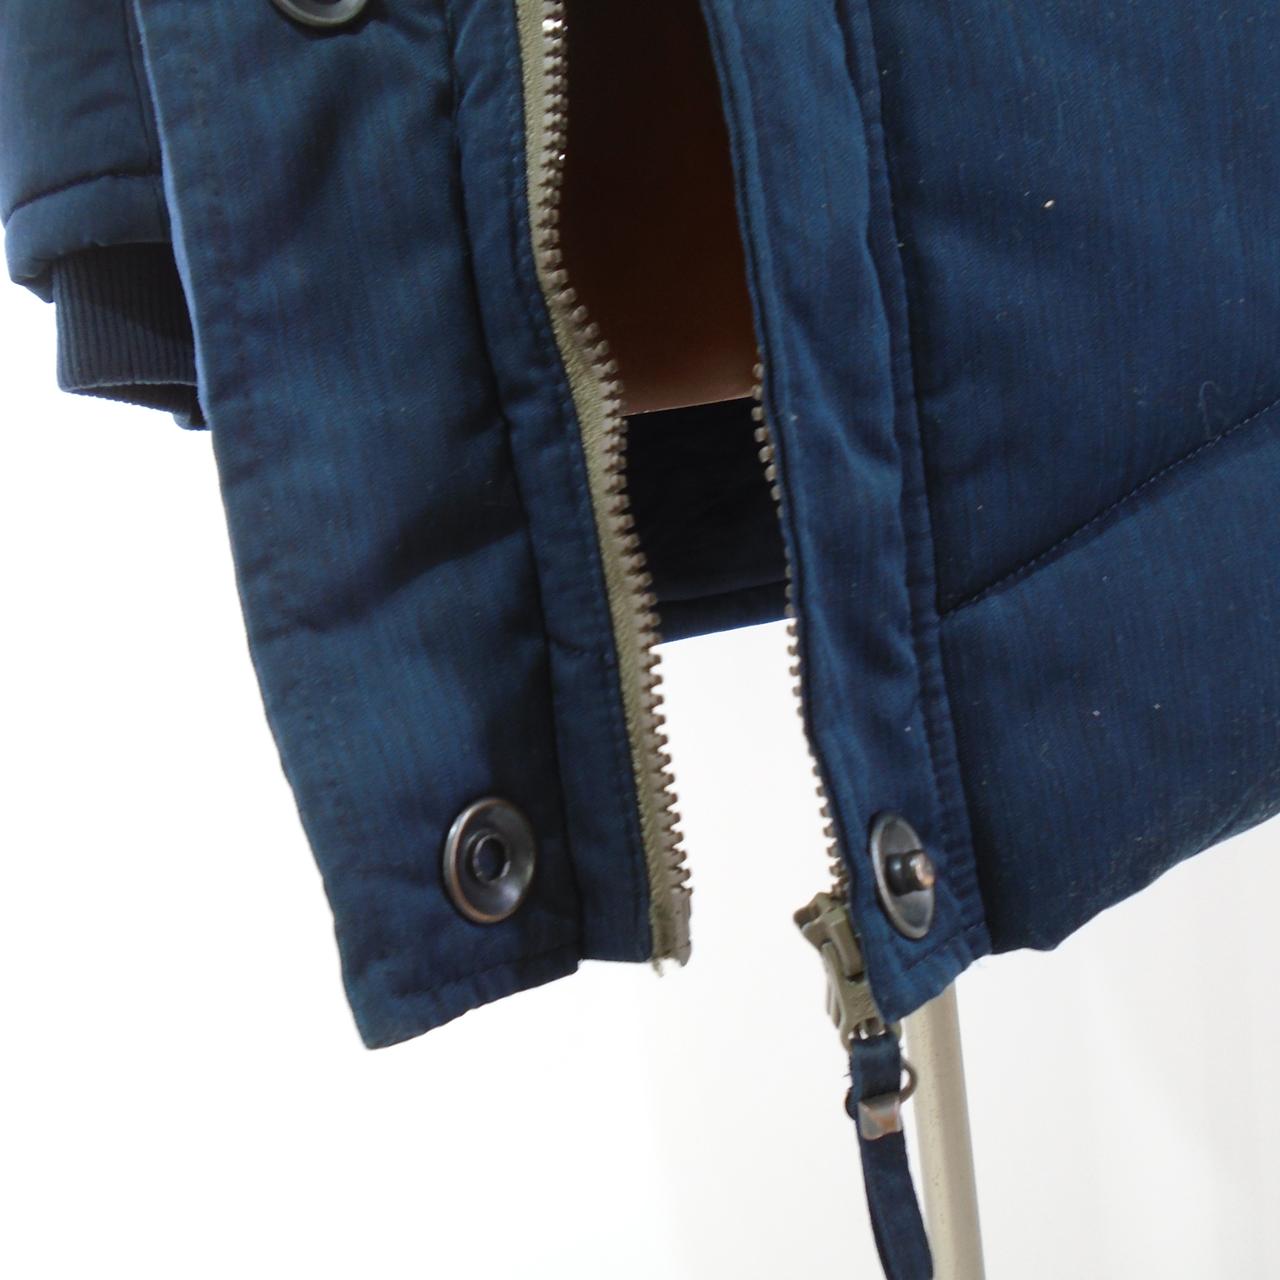 Women's Coat Tom Tailor. Dark blue. M. Used. Good